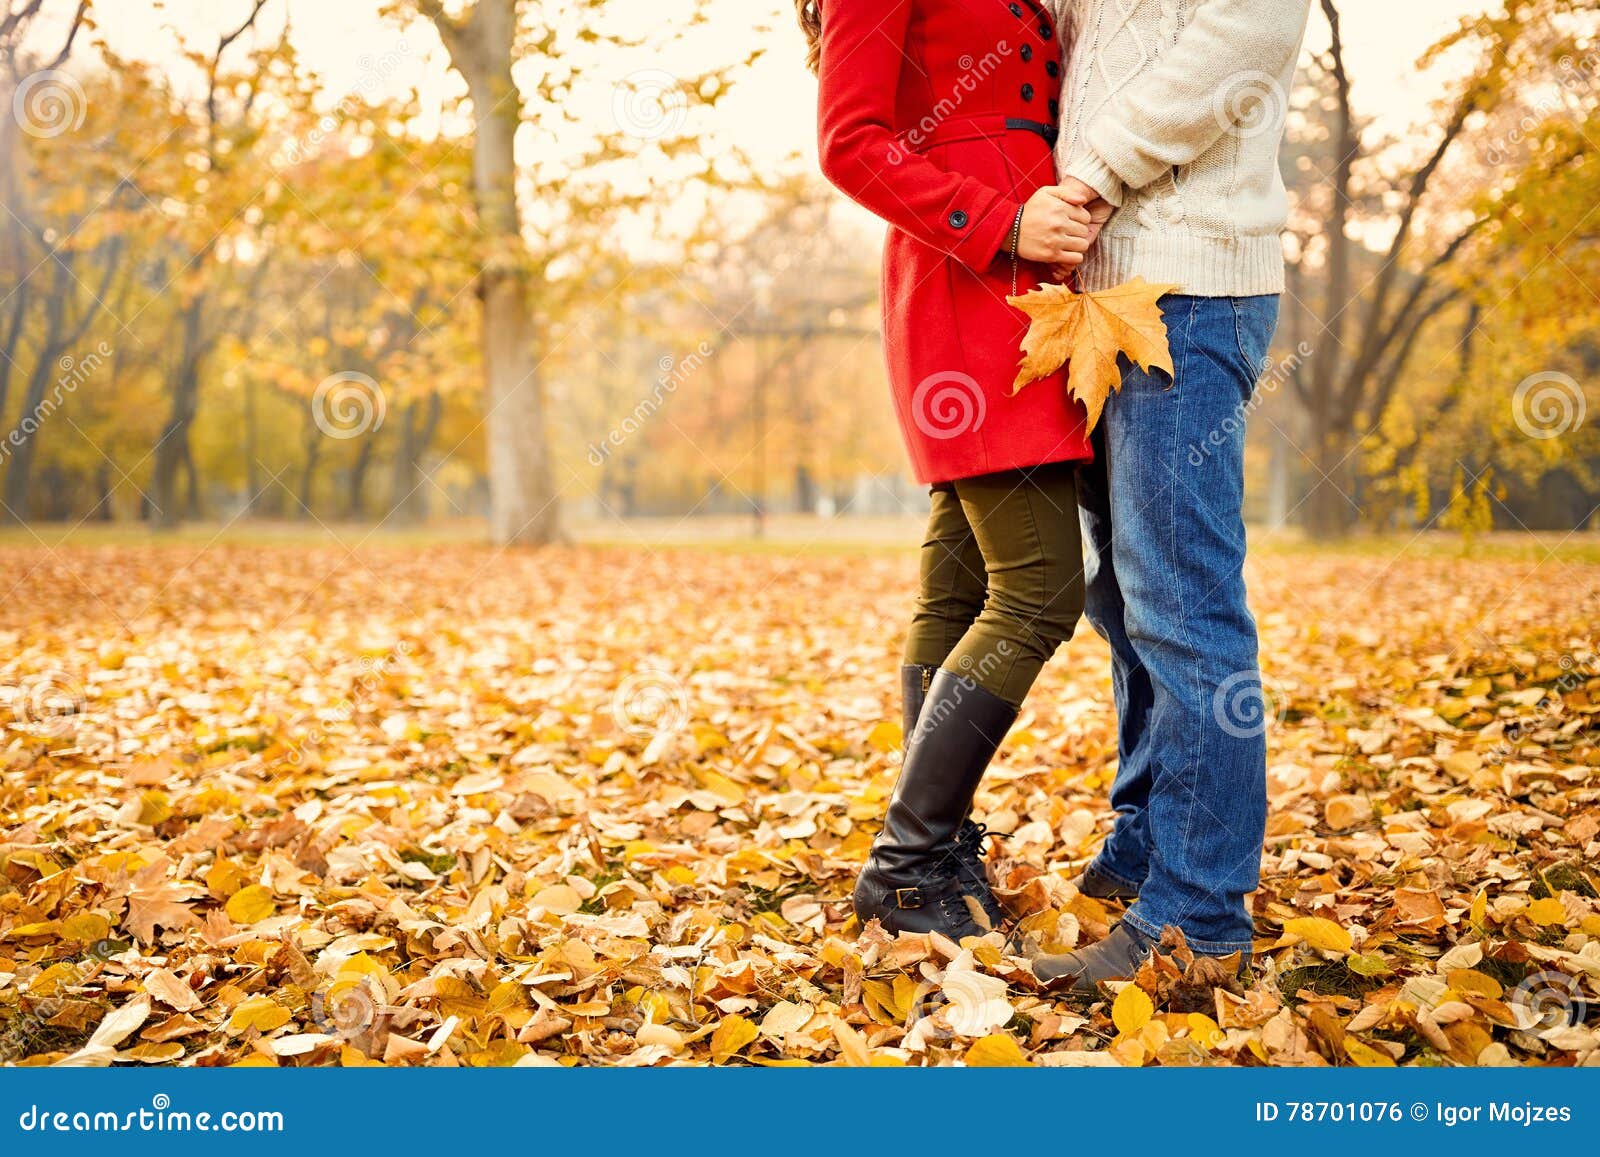 romance in autumn in park